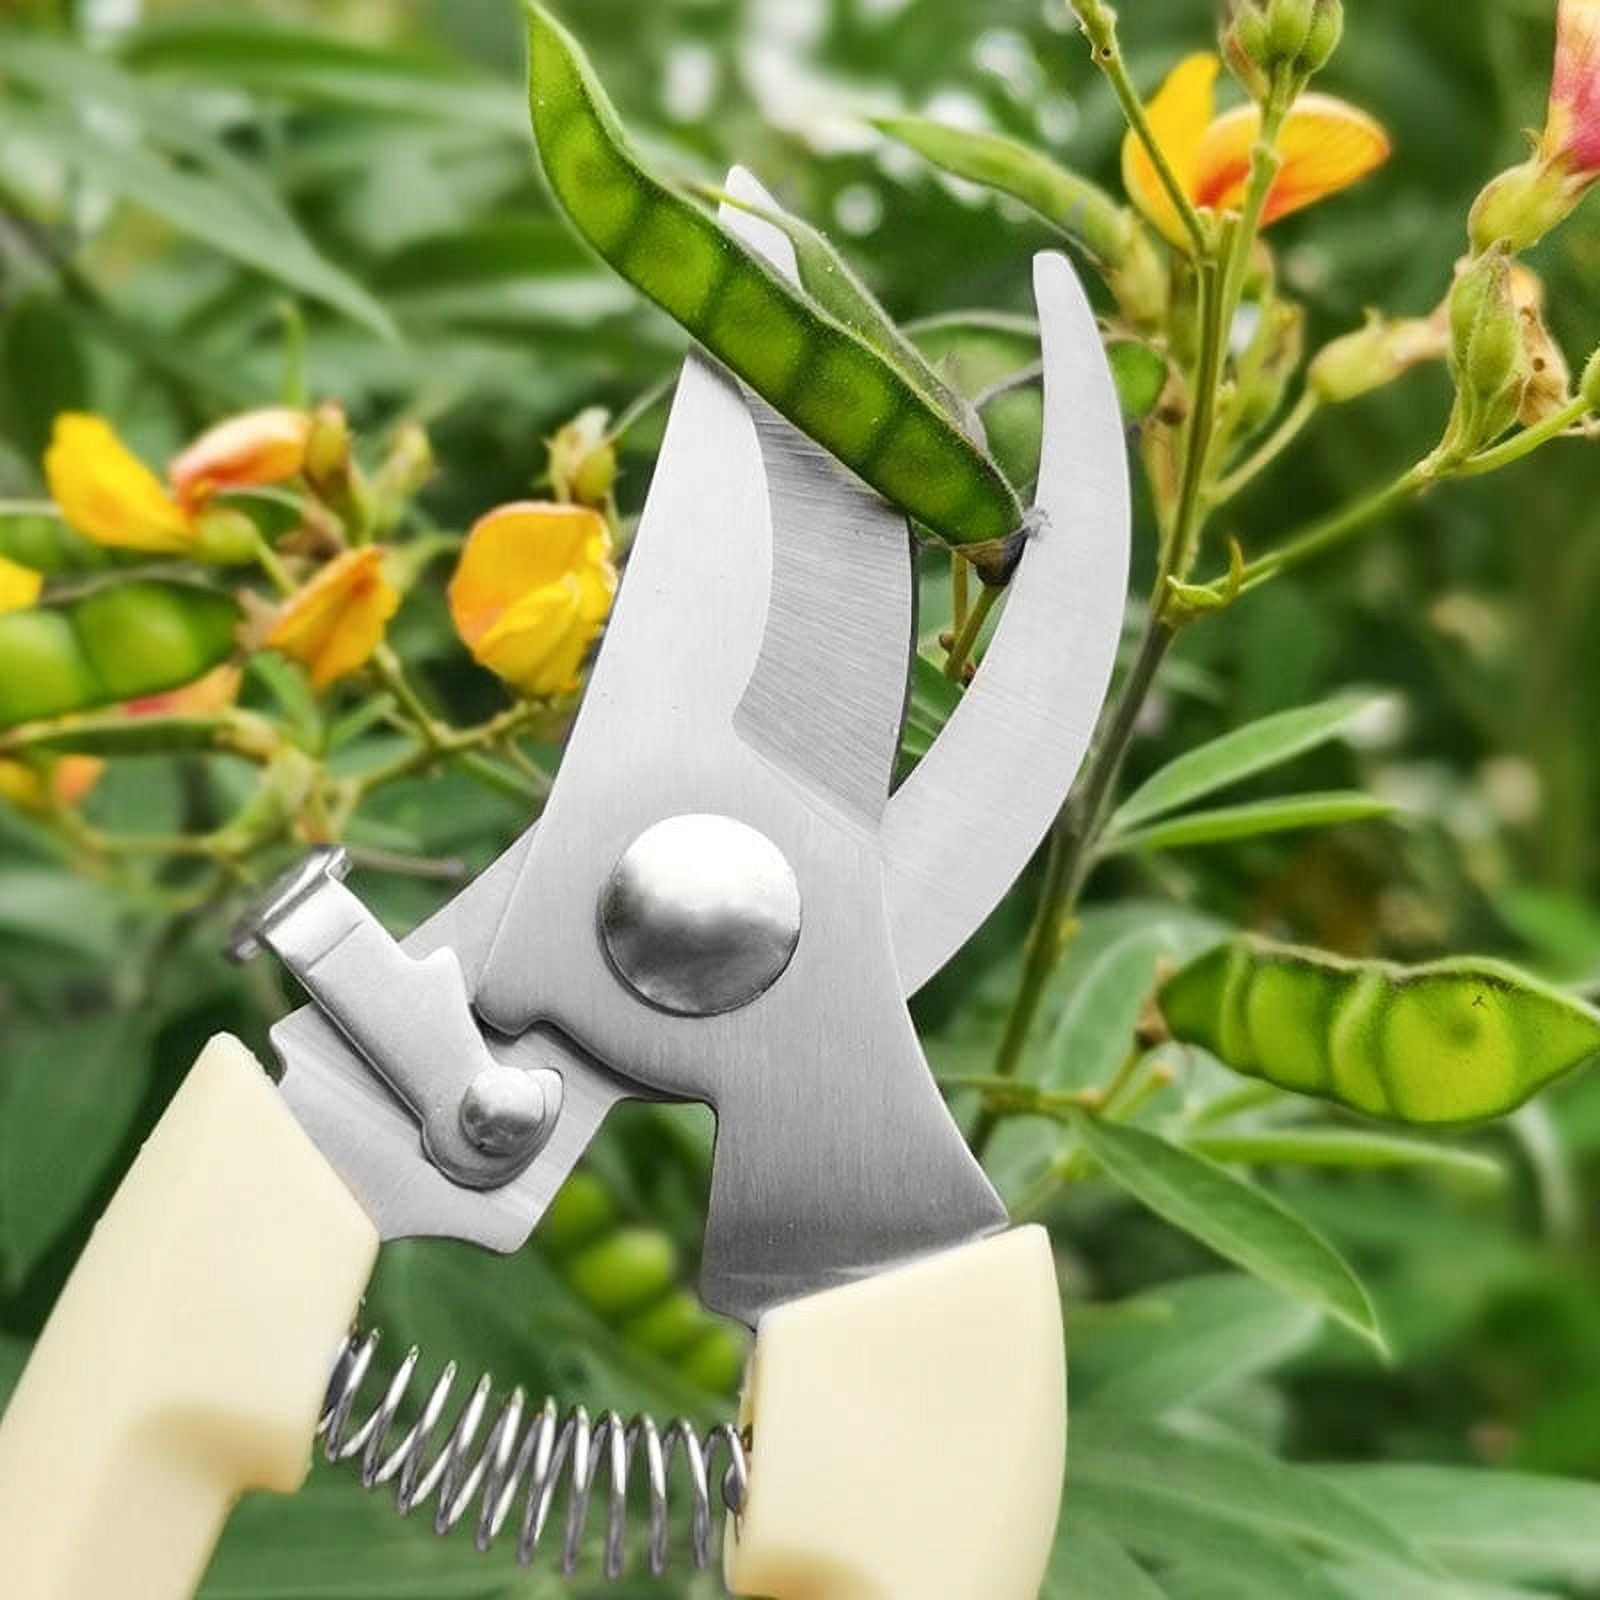 Pruning Shear Hand Pruners Gardening Tools Handheld Pruners Garden Clippers  for Bonsai Branches Orchard Garden Gardening - AliExpress